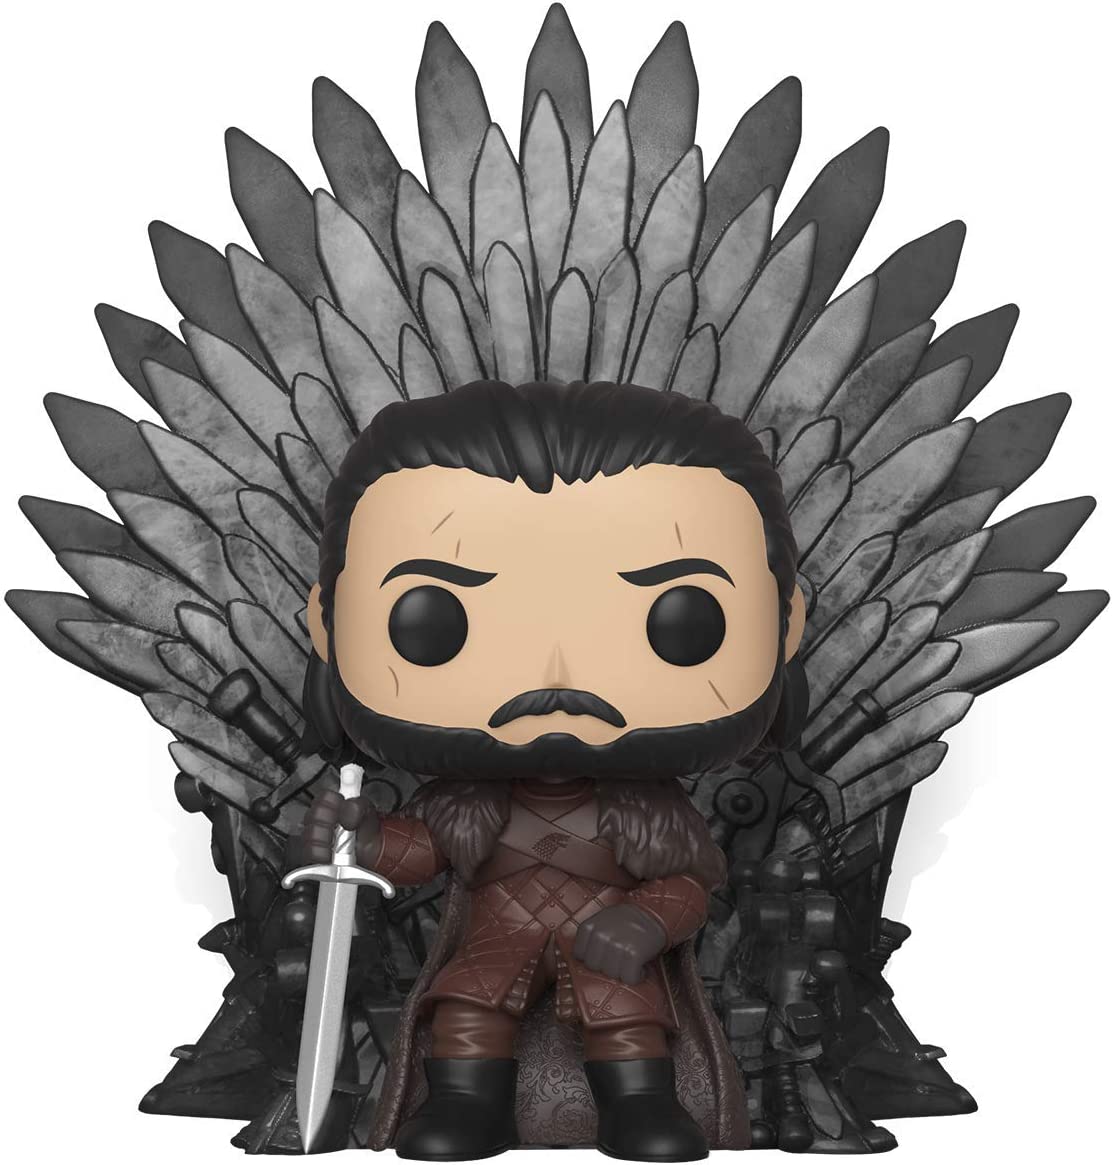 Jon Snow In The Iron Throne Wallpapers